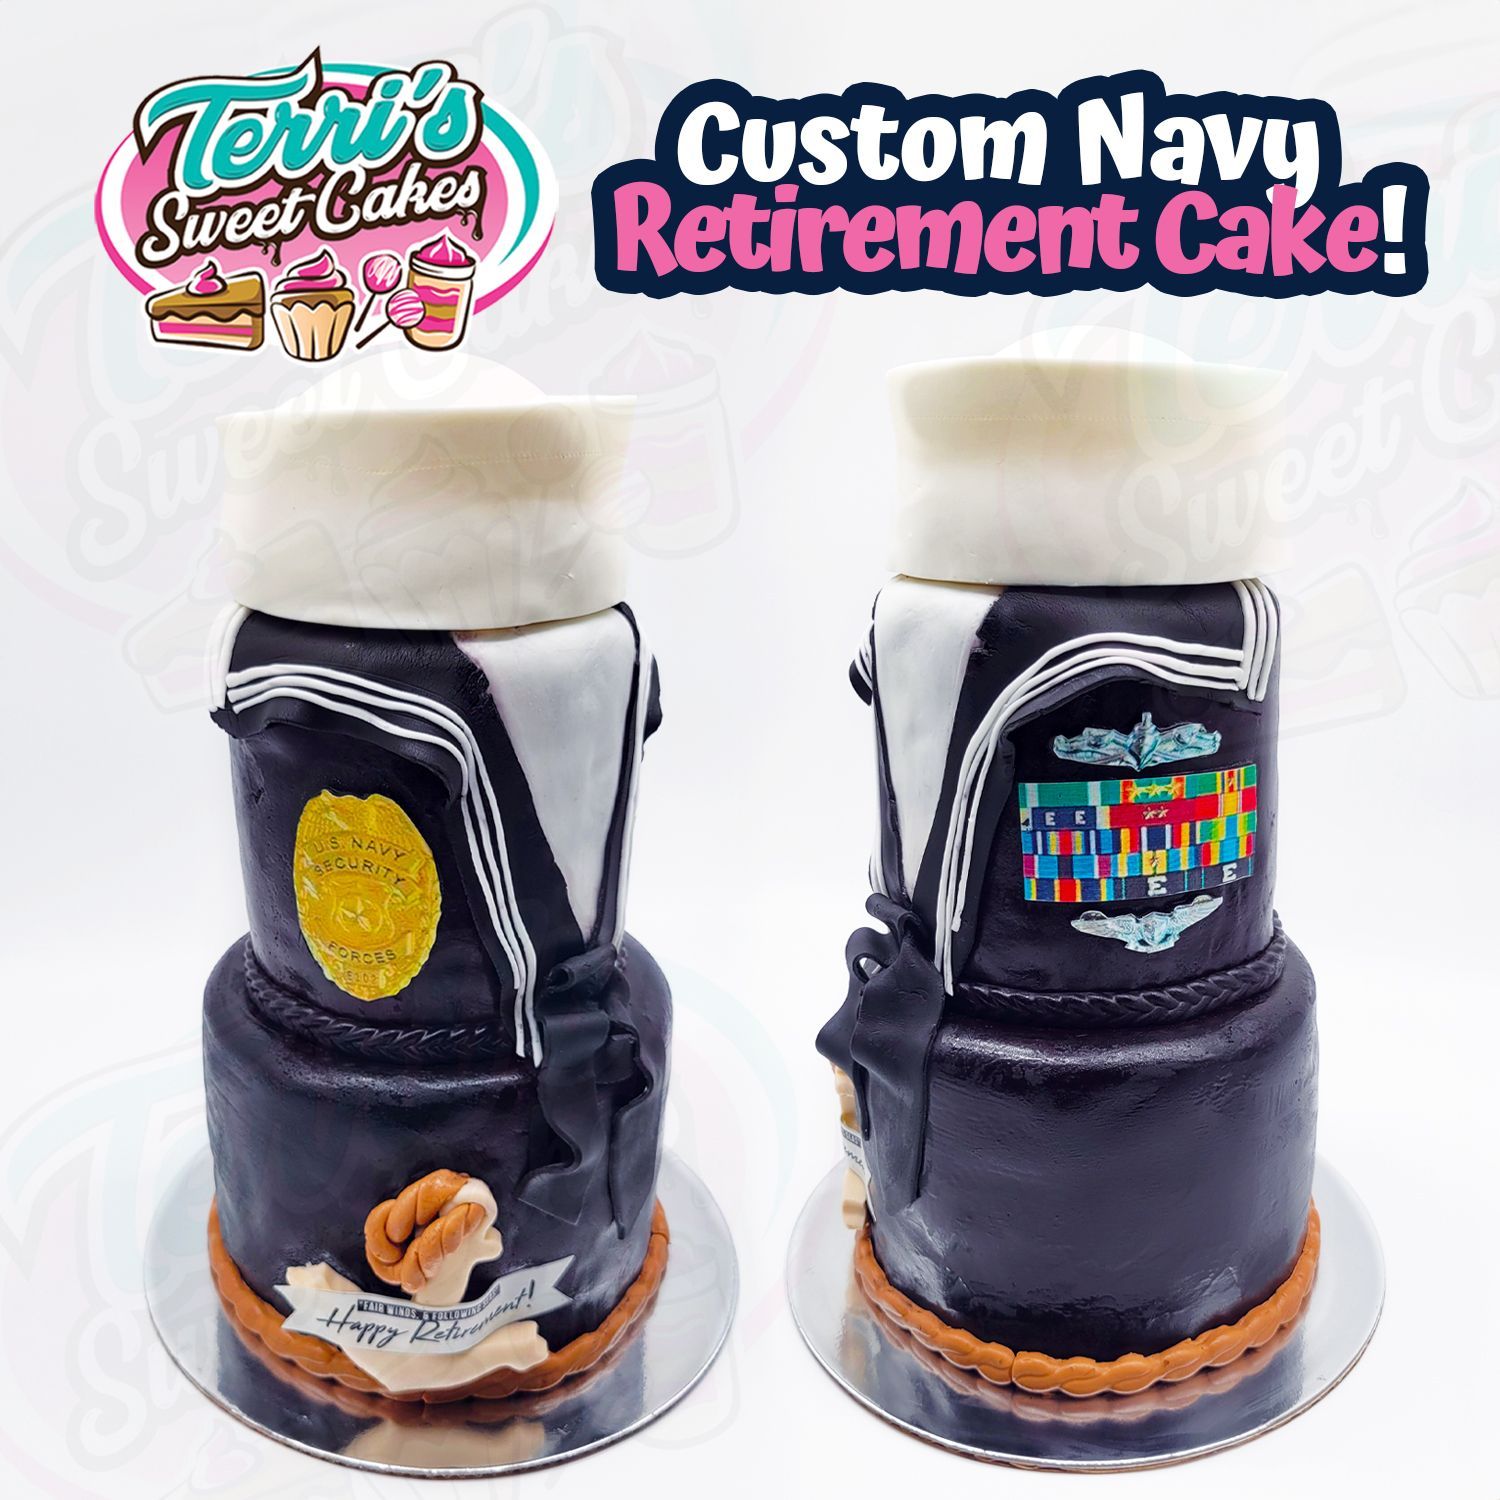 Custom Navy Retirement Cake by Terri's Sweet Cakes!